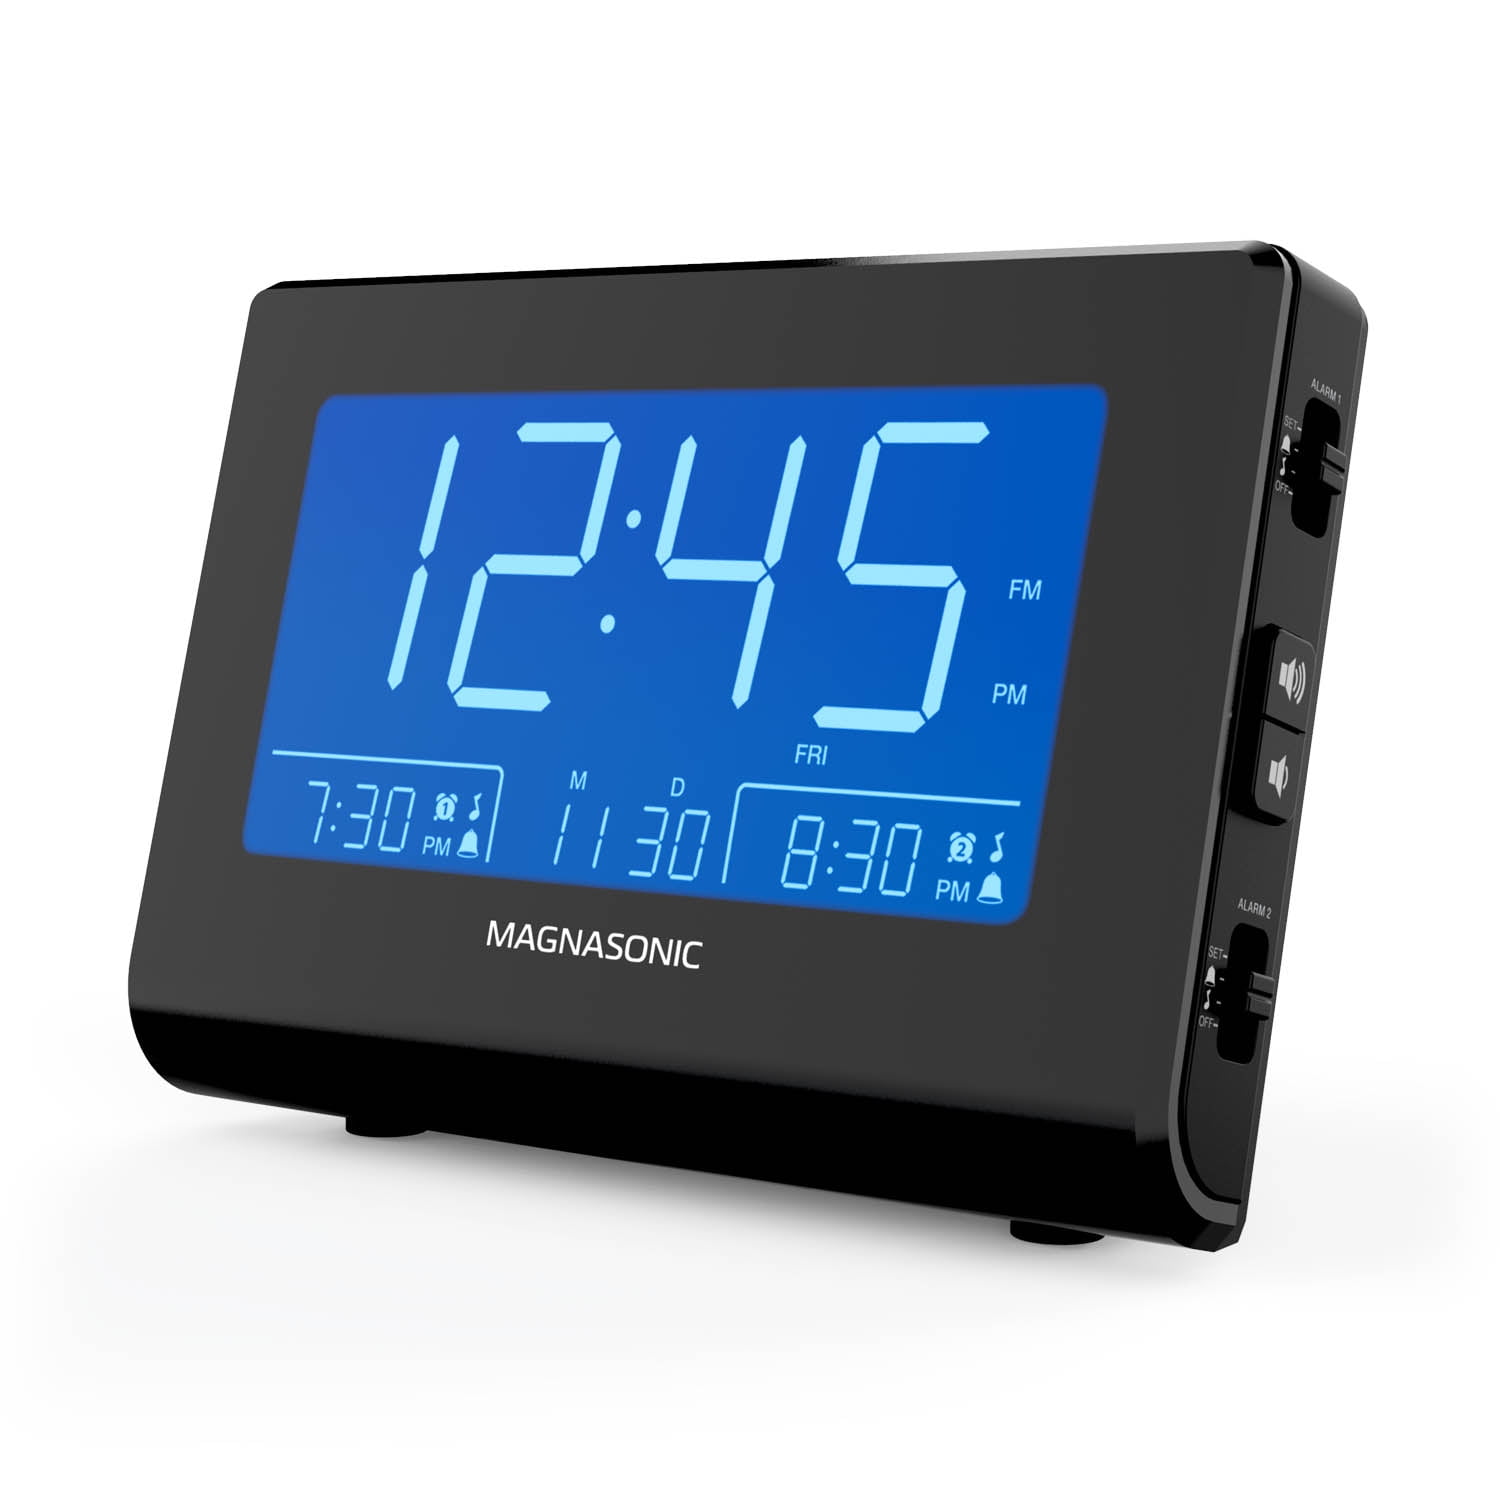 Magnasonic Alarm Clock Radio With Usb Charging For Smartphones